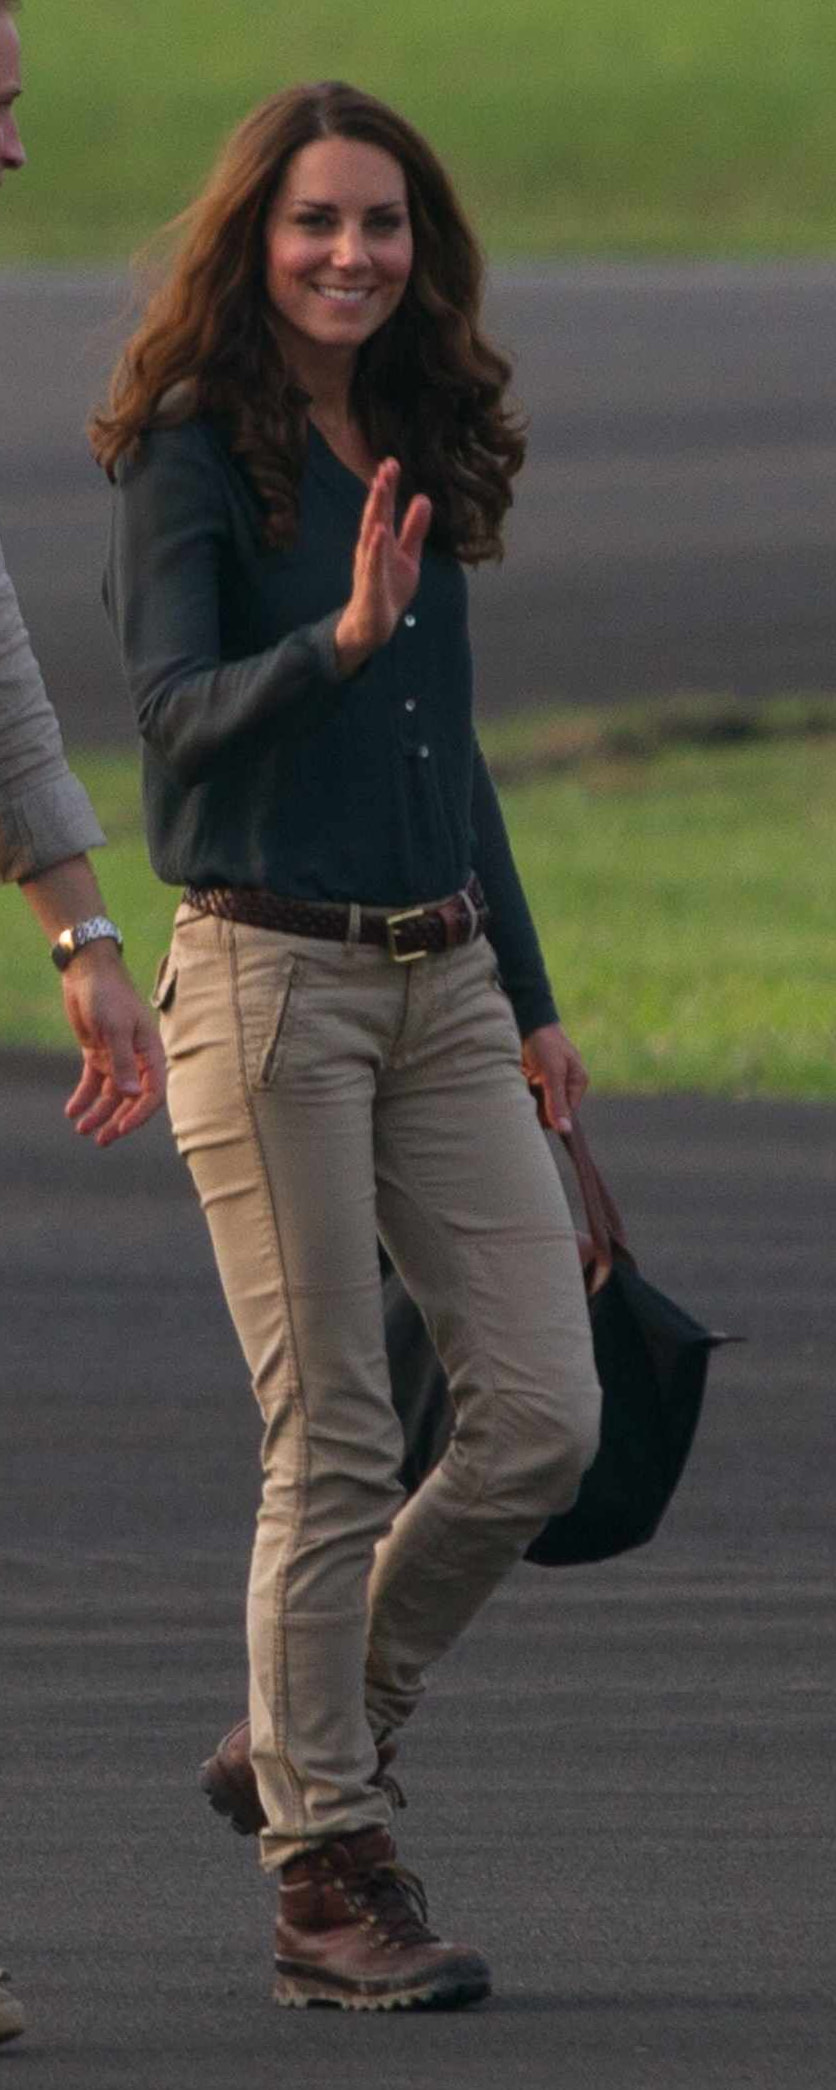 Longchamp Le Pliage Black Medium Top Handle Bag as seen on Kate Middleton, The Duchess of Cambridge.